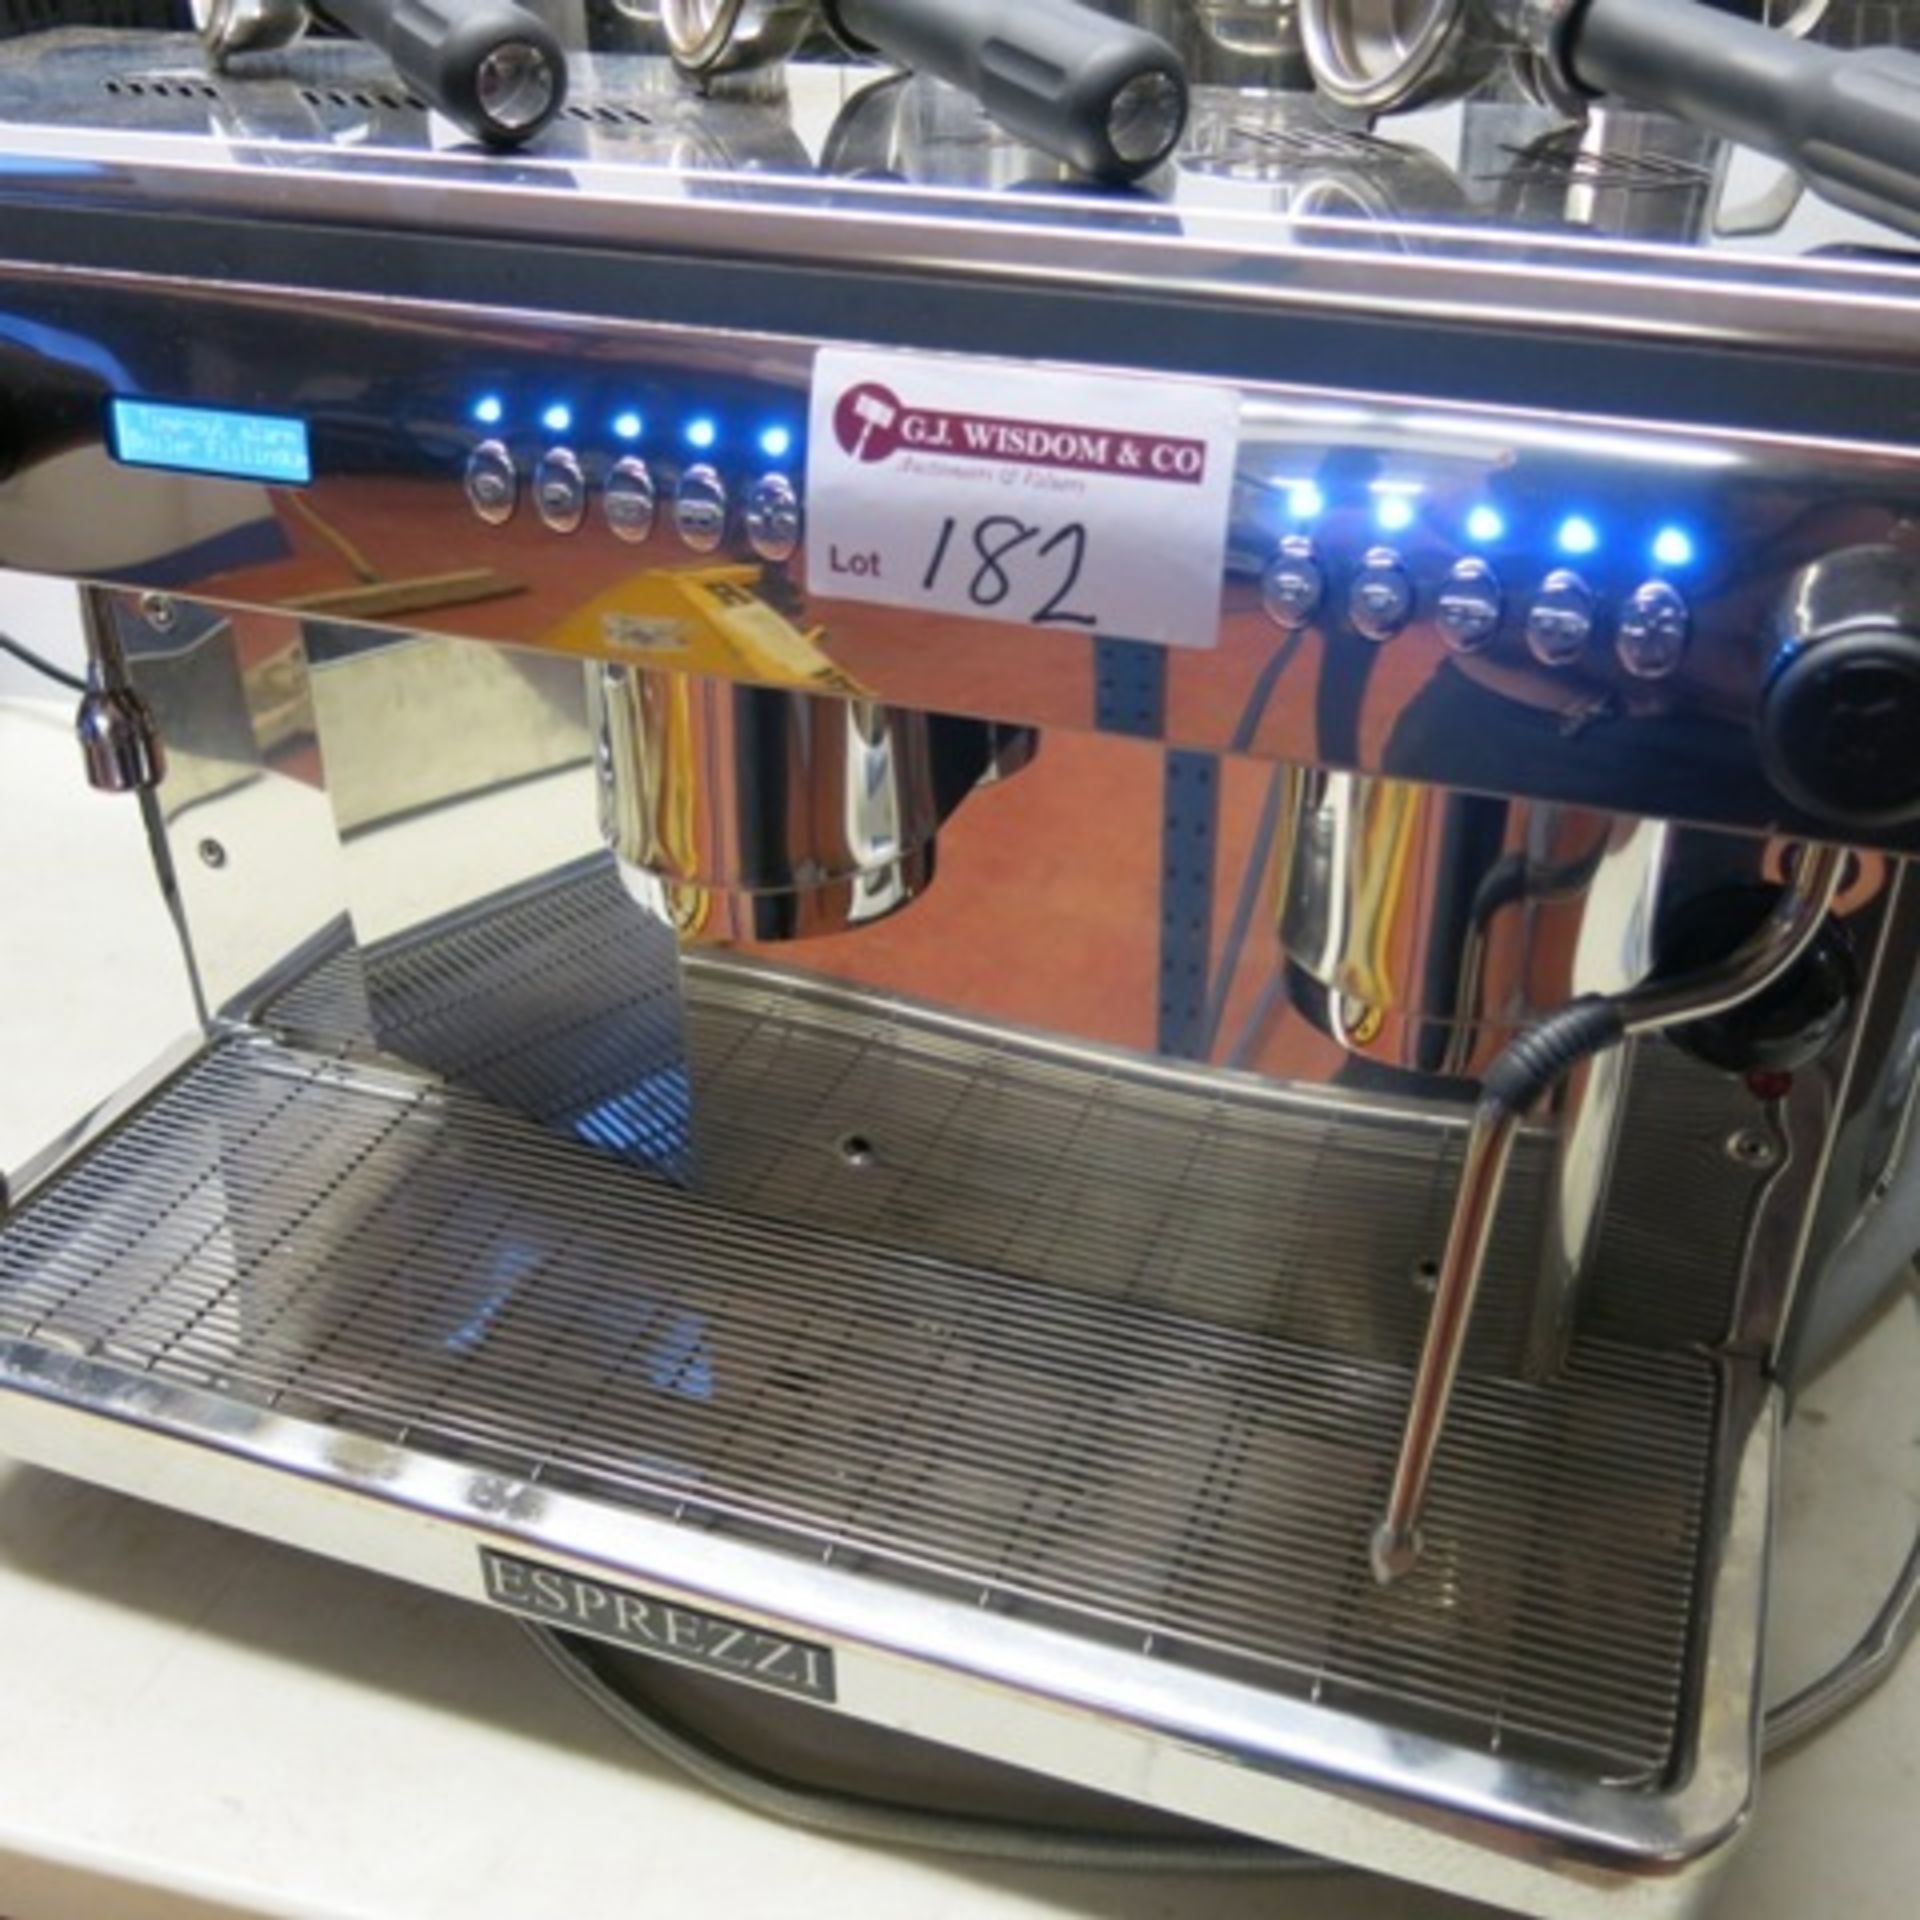 Esprezzi Ultra 2 Group Espresso Machine, Model G-10 with Attachments, Milk Jugs & WatchWater SP520 - Image 3 of 8